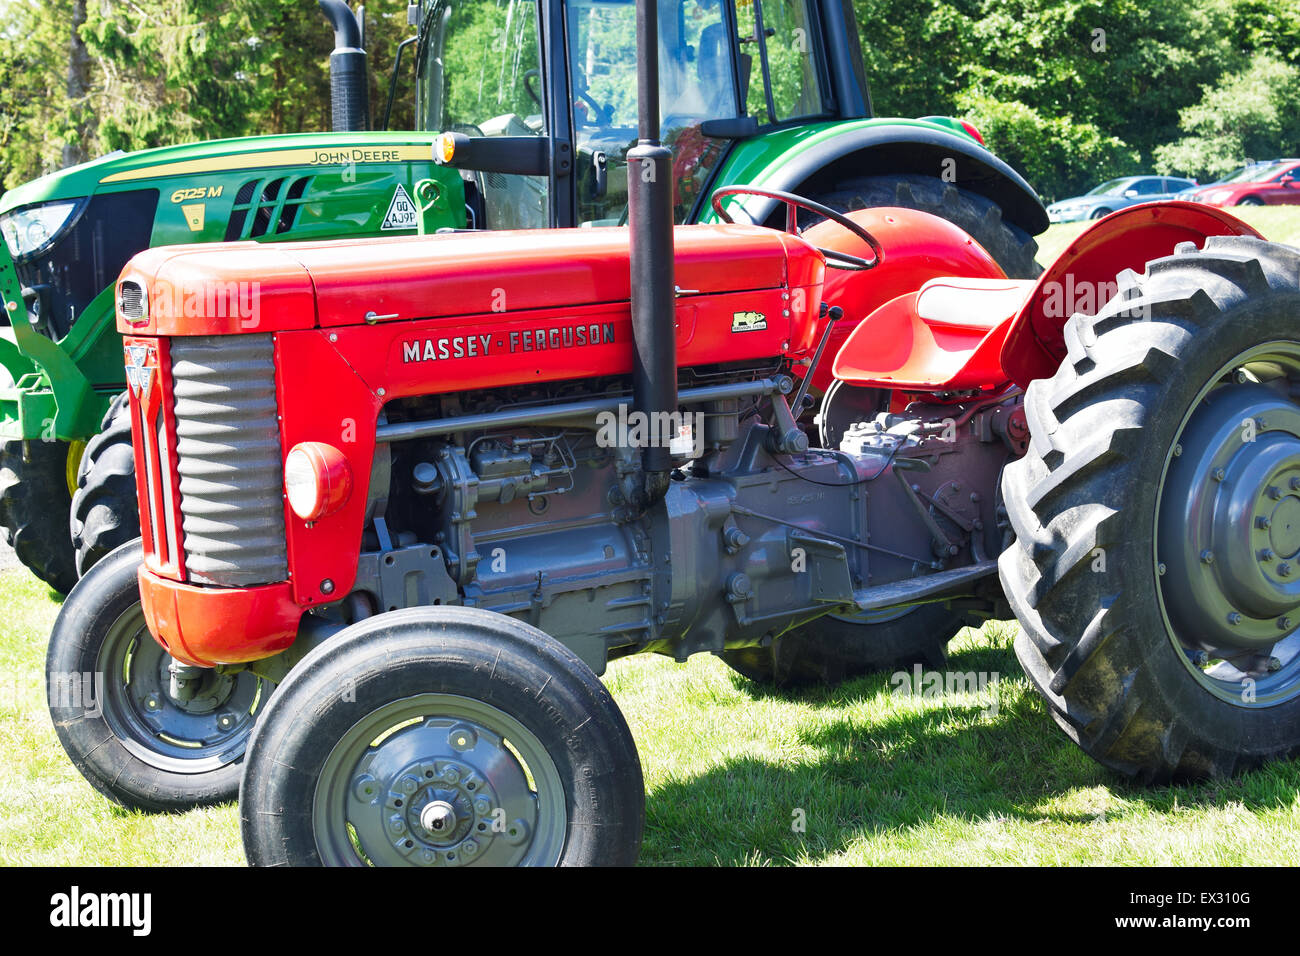 Red Massey Ferguson tractor, with green John Deere tractor behind Stock  Photo - Alamy